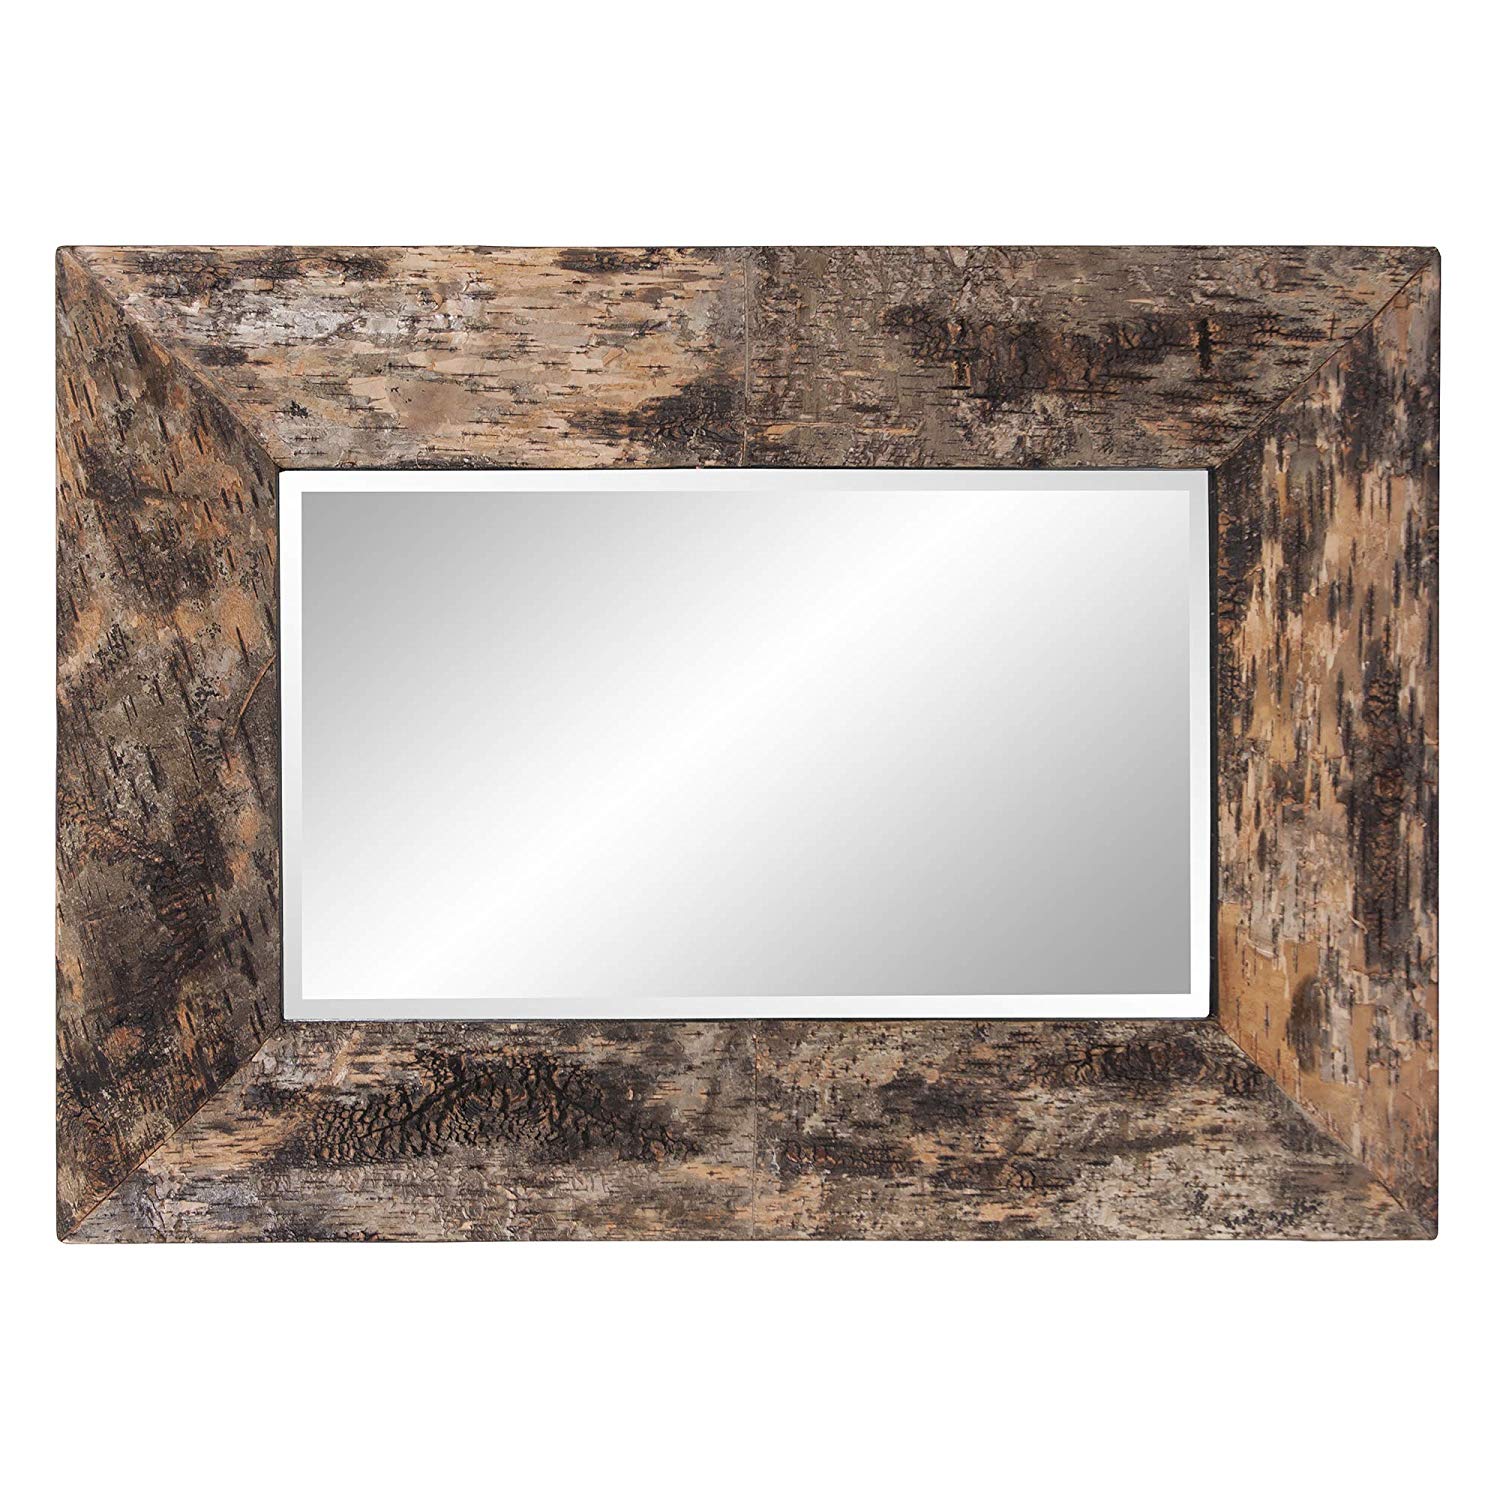 Howard Elliott Kawaga Mirror, Natural Birch Bark Frame, Rustic Lodge Decor